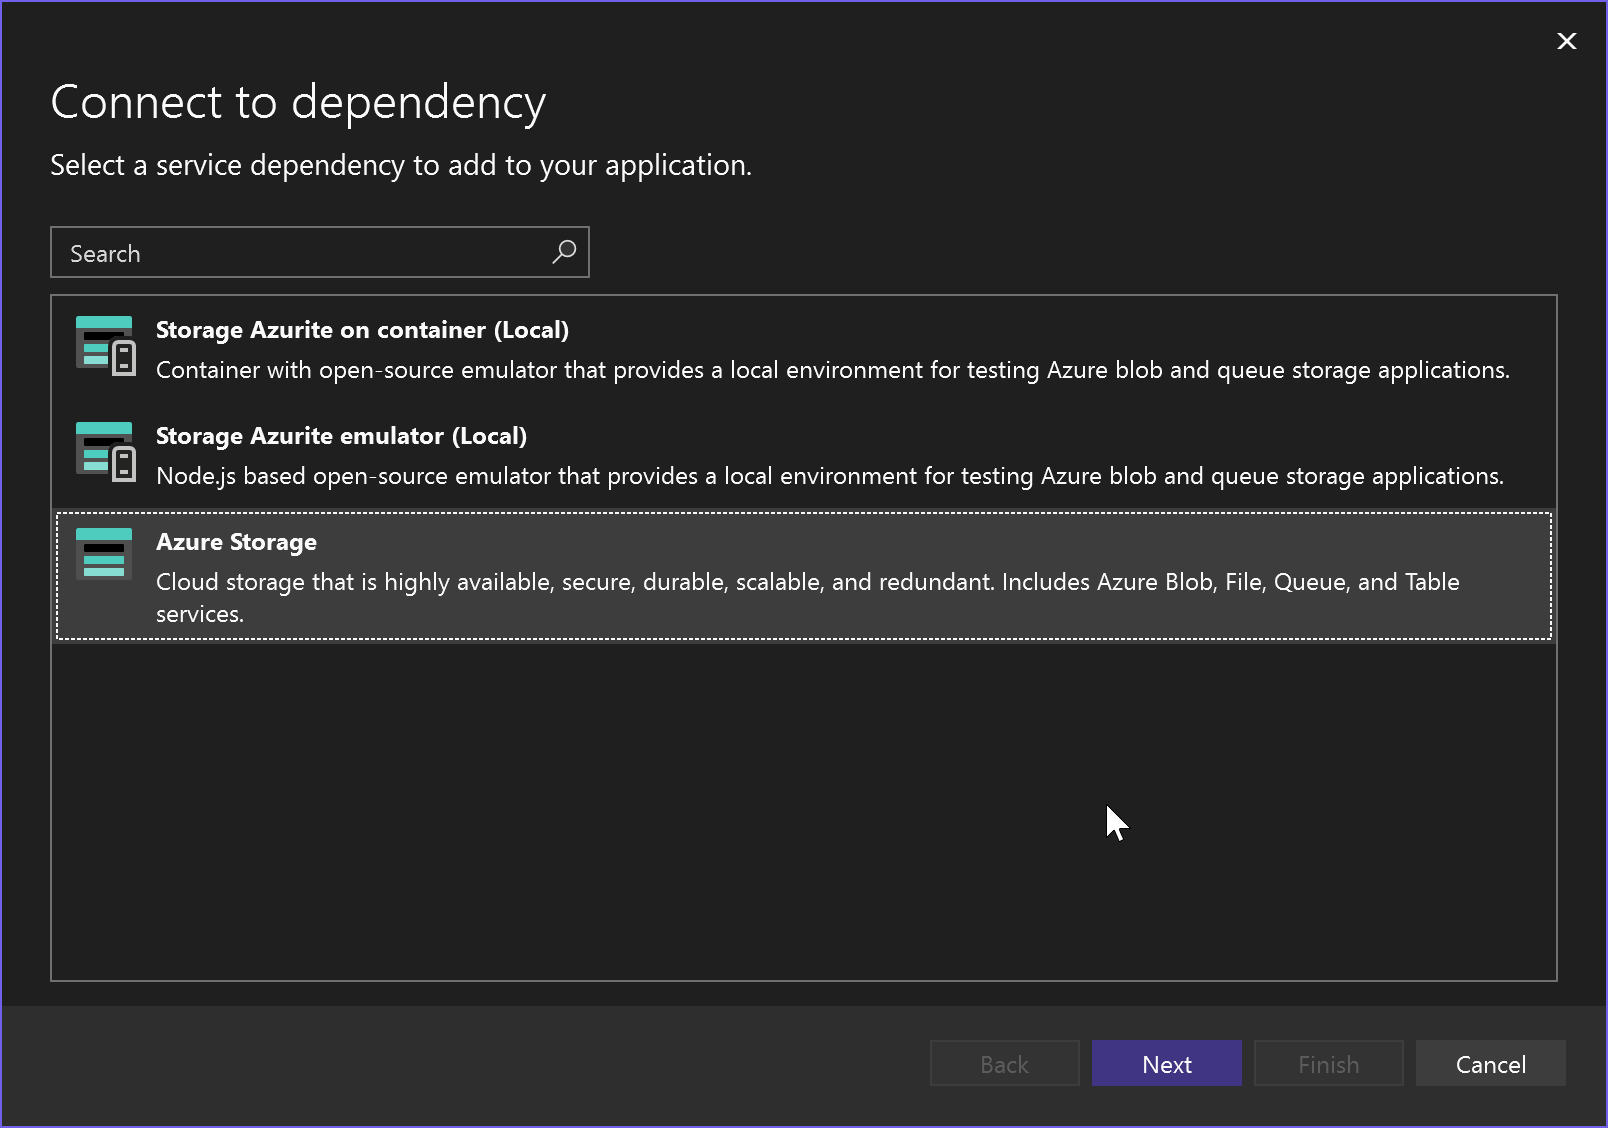 Screenshot showing connecting to dependency - Azure Storage.